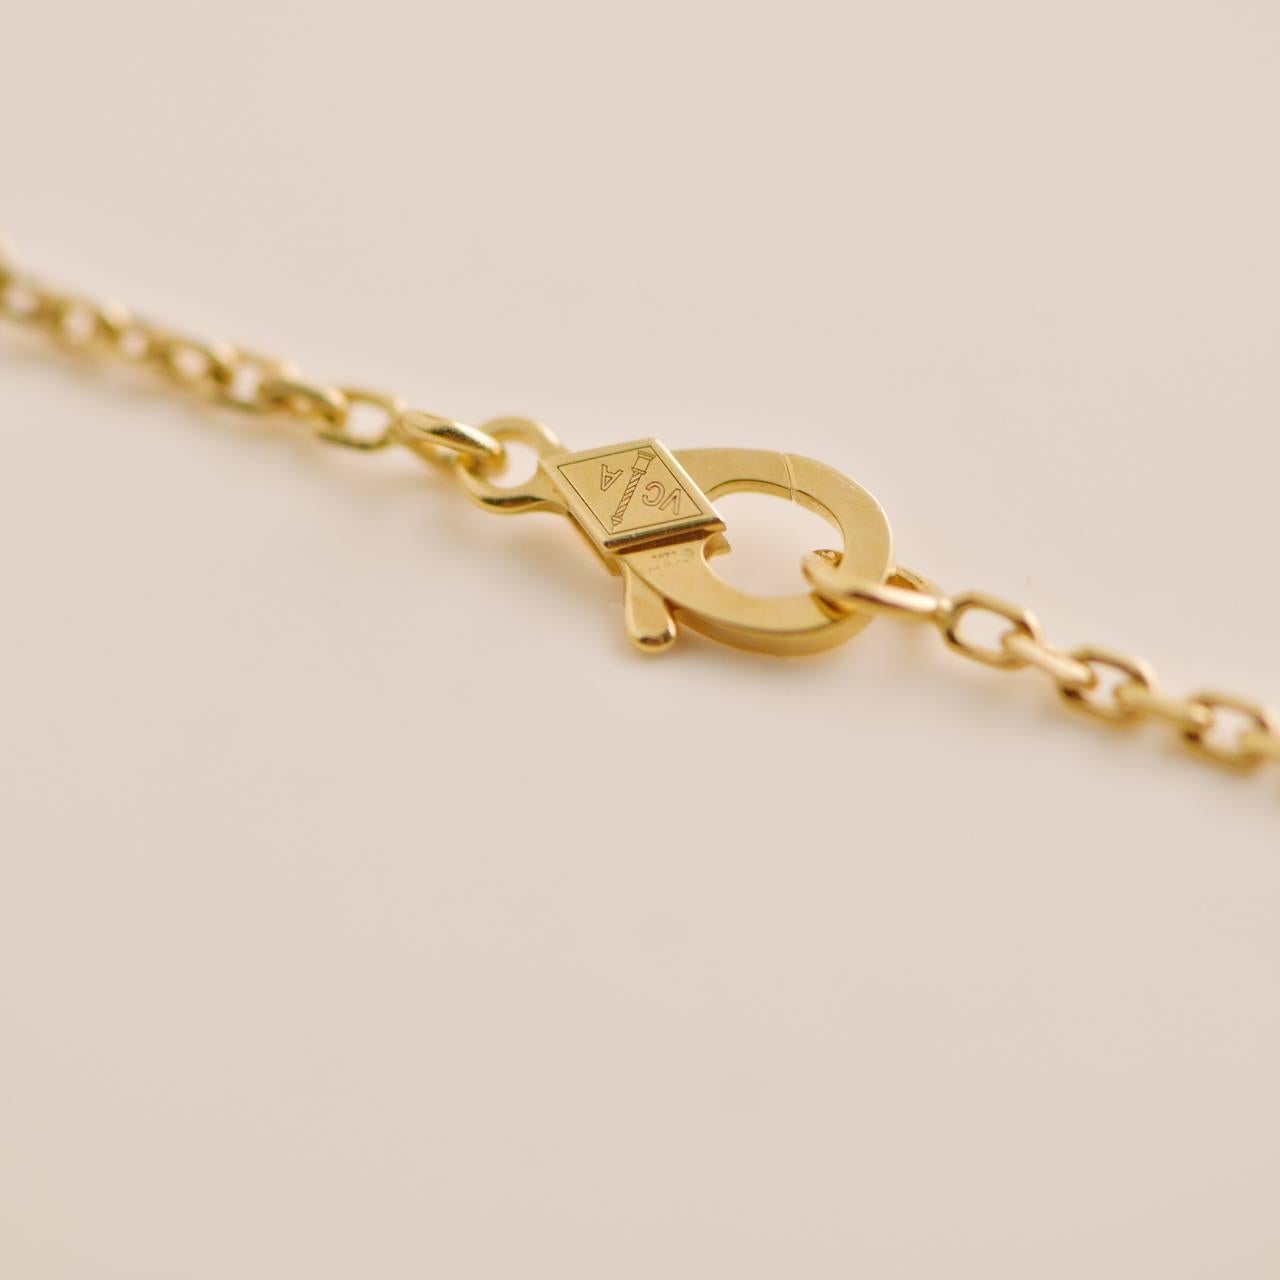 Van Cleef & Arpels Zodiaque Medal Geminorum Yellow Gold Pendant Necklace For Sale 2